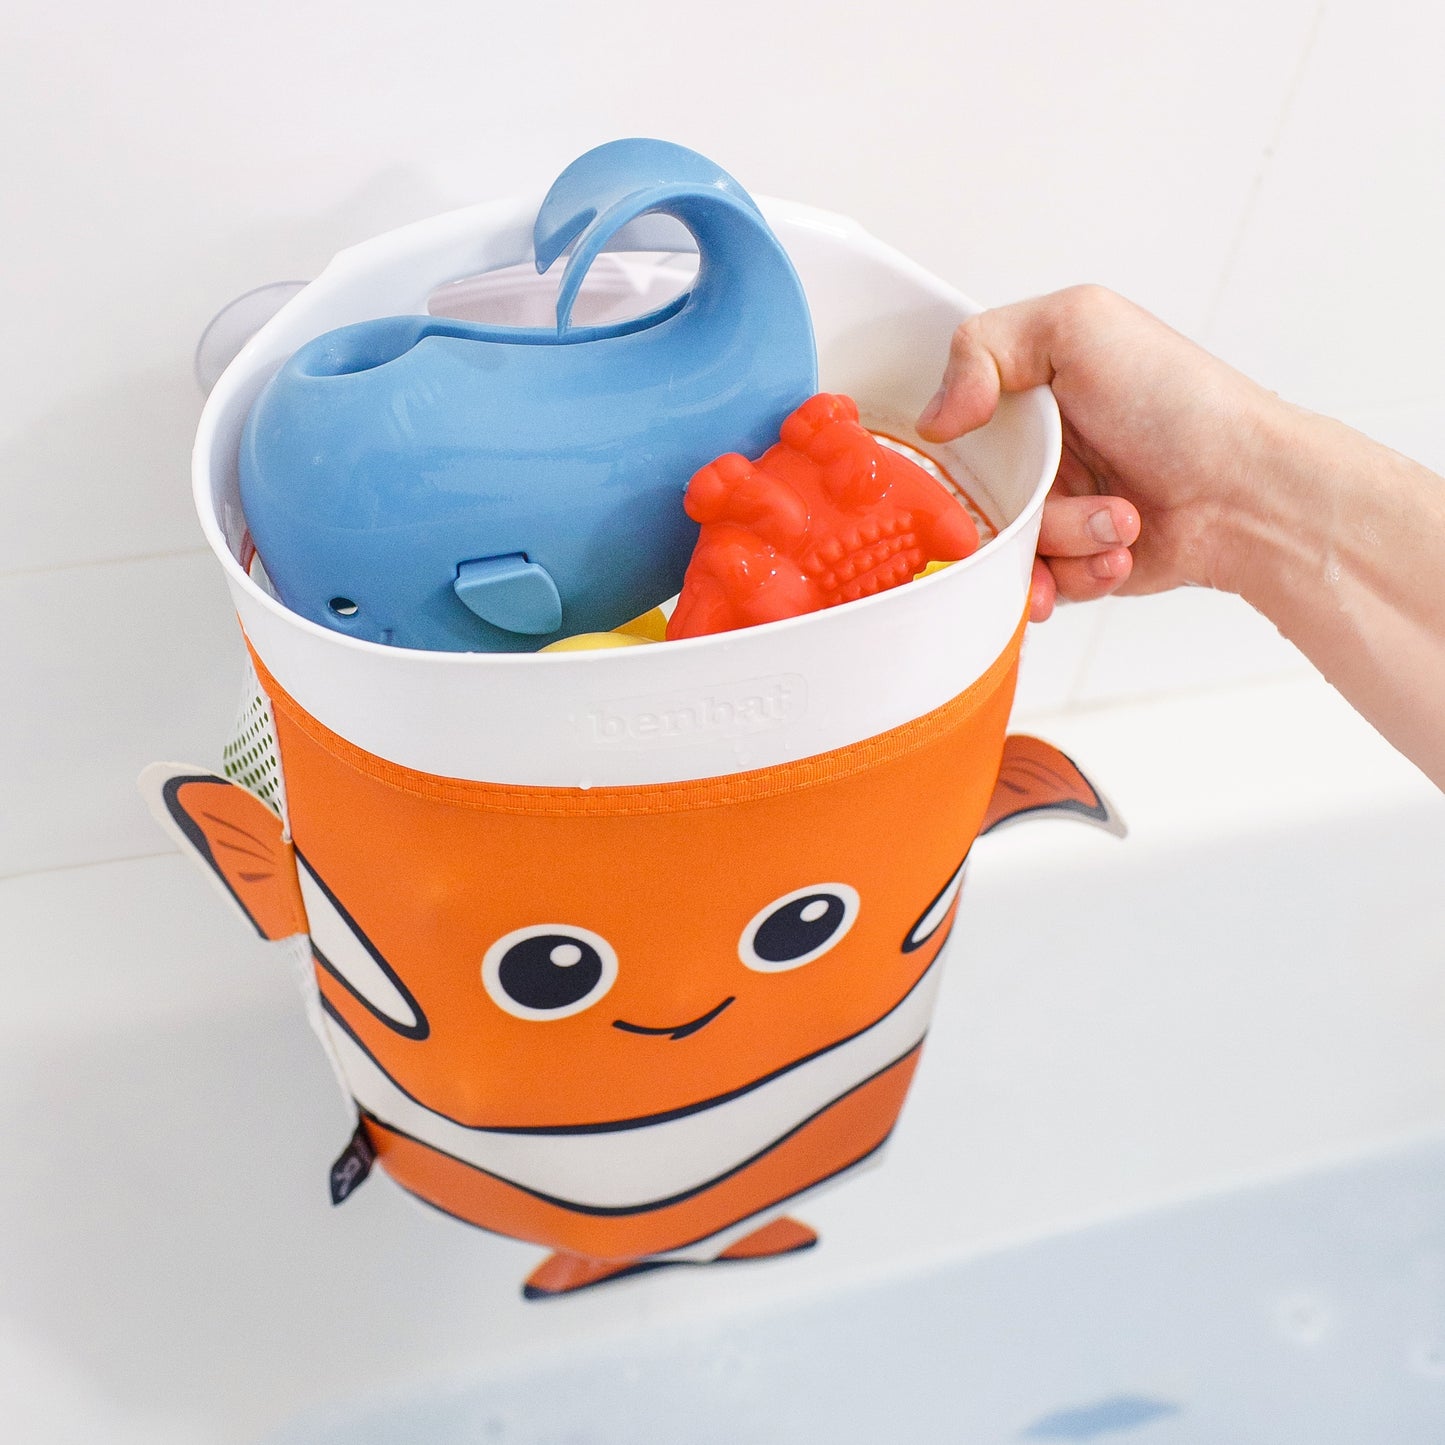 Benbat - Scoop & Store Bath Toy Organizer Captain Nemo